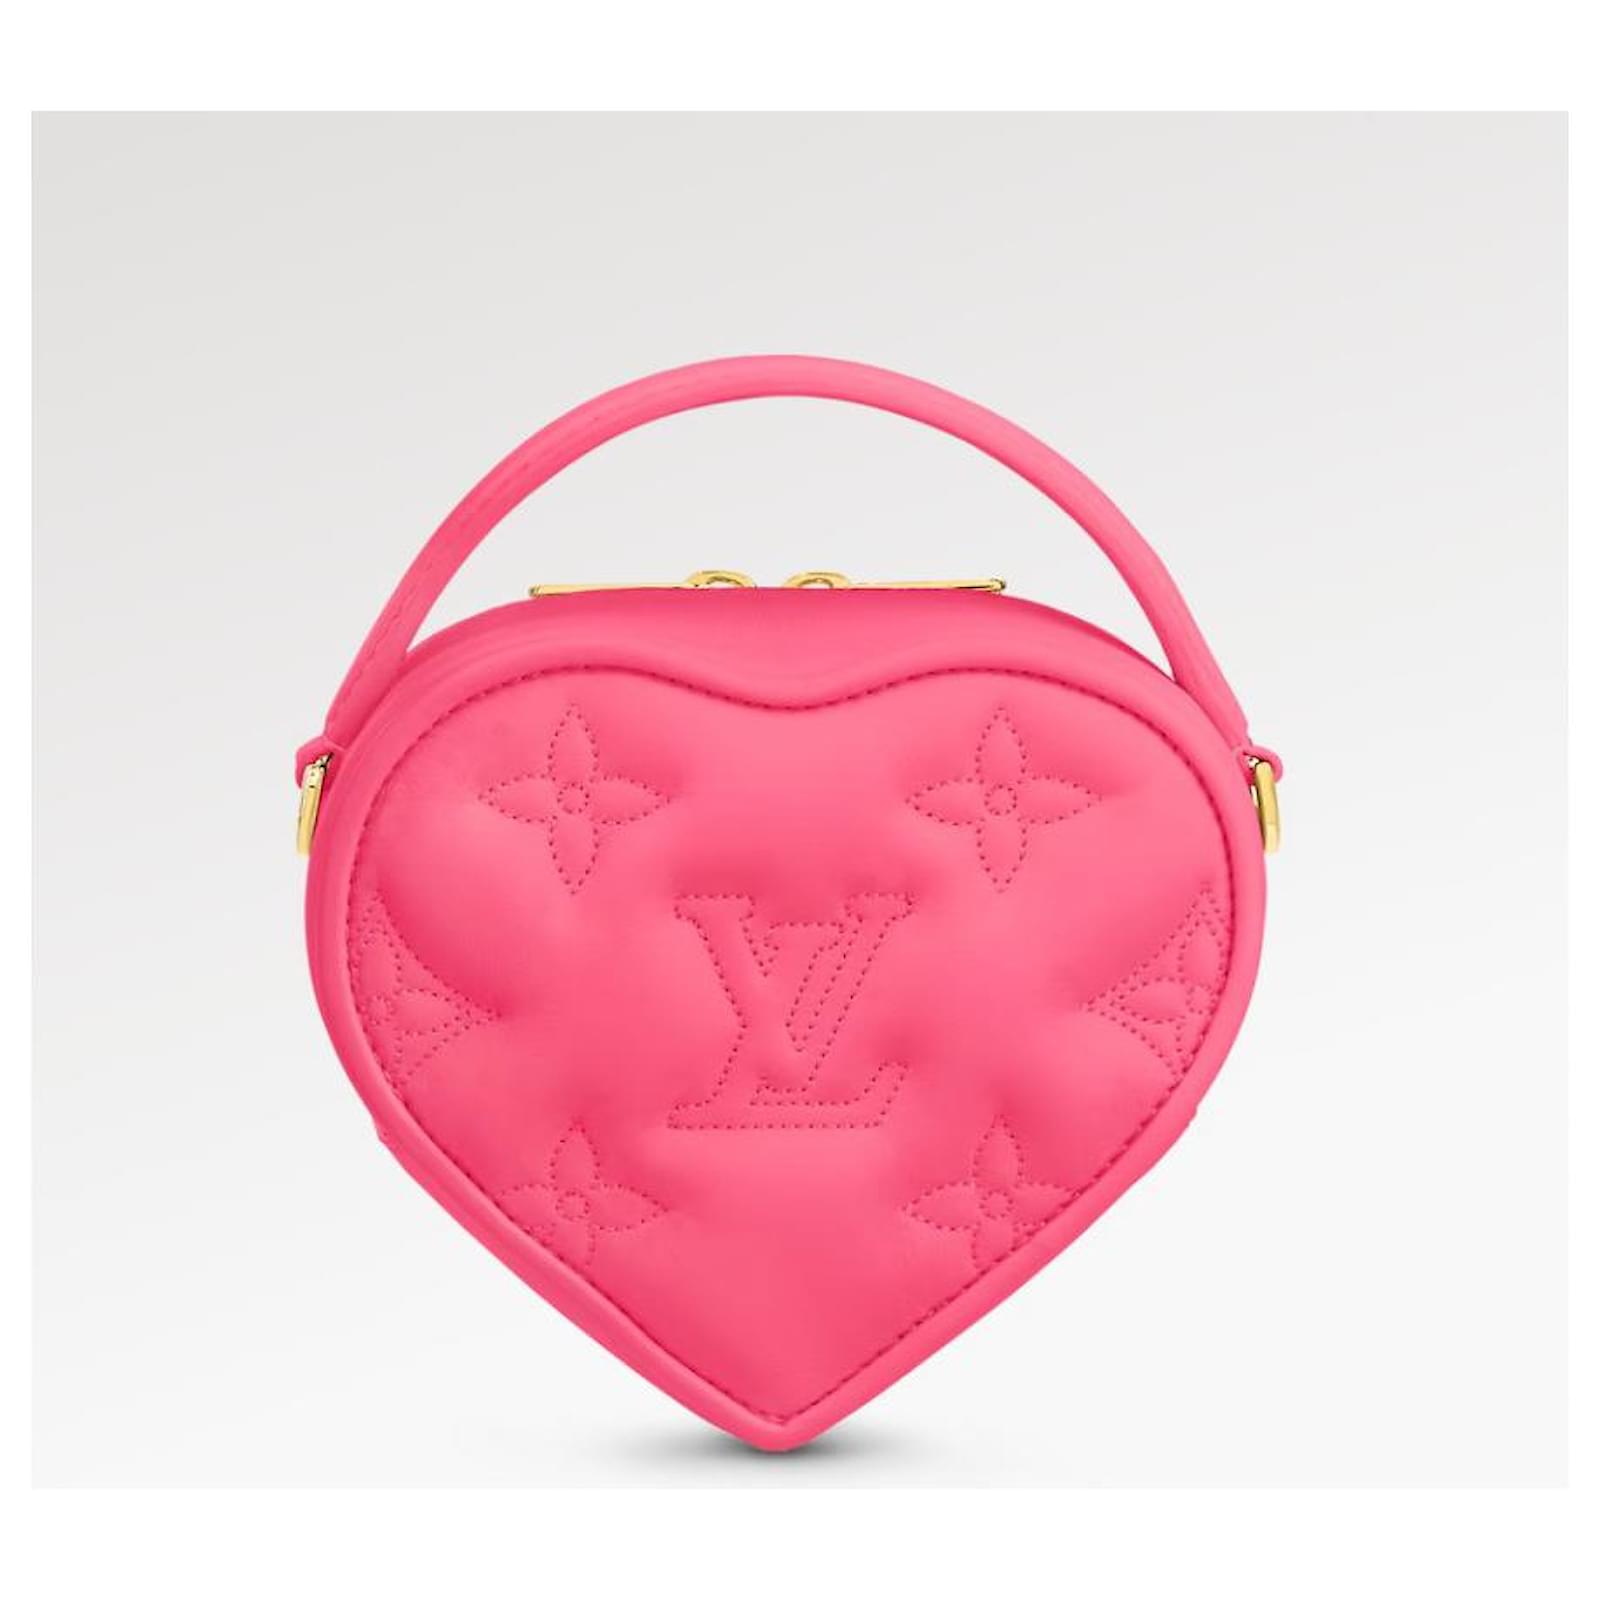 louis vuitton heart shaped bag